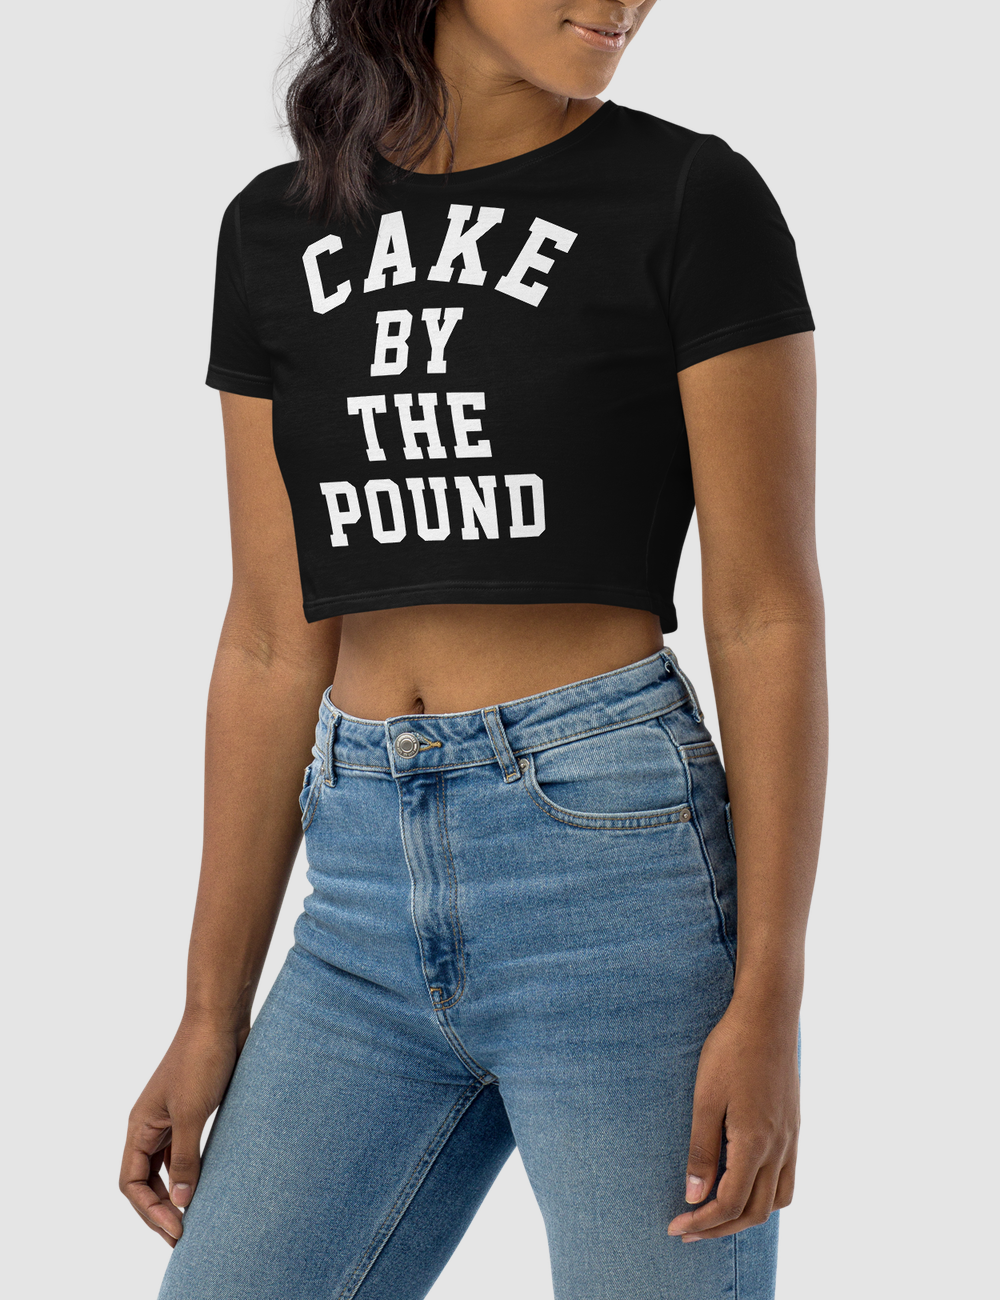 Cake By The Pound | Women's Crop Top T-Shirt OniTakai